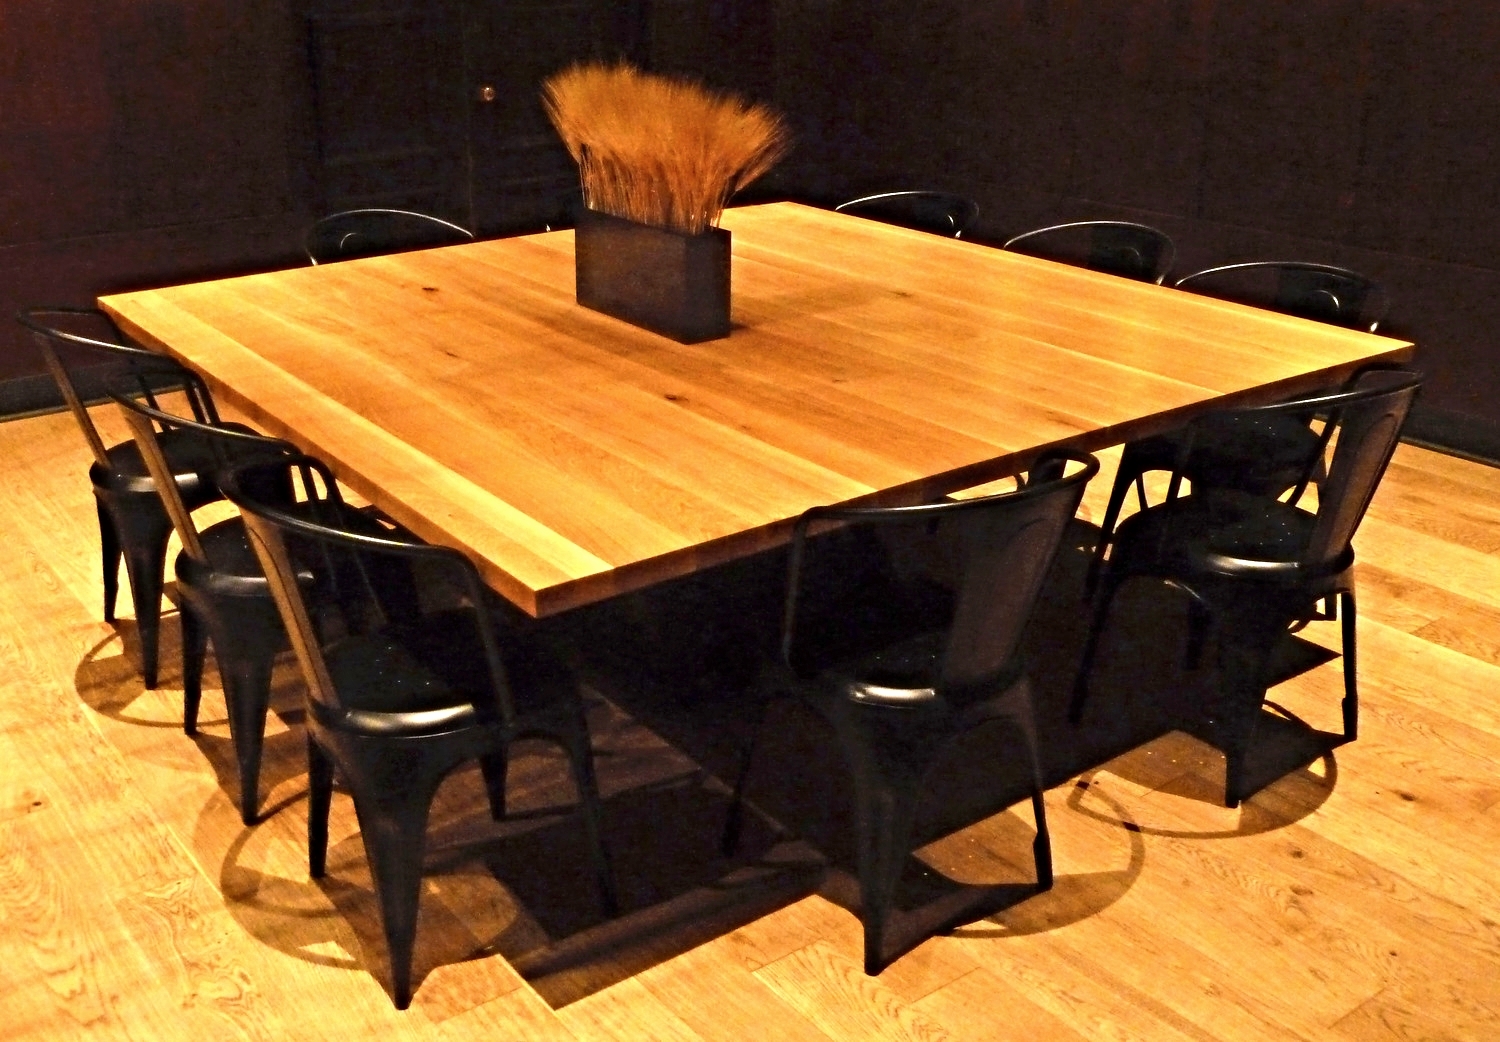 7'x7' oak table